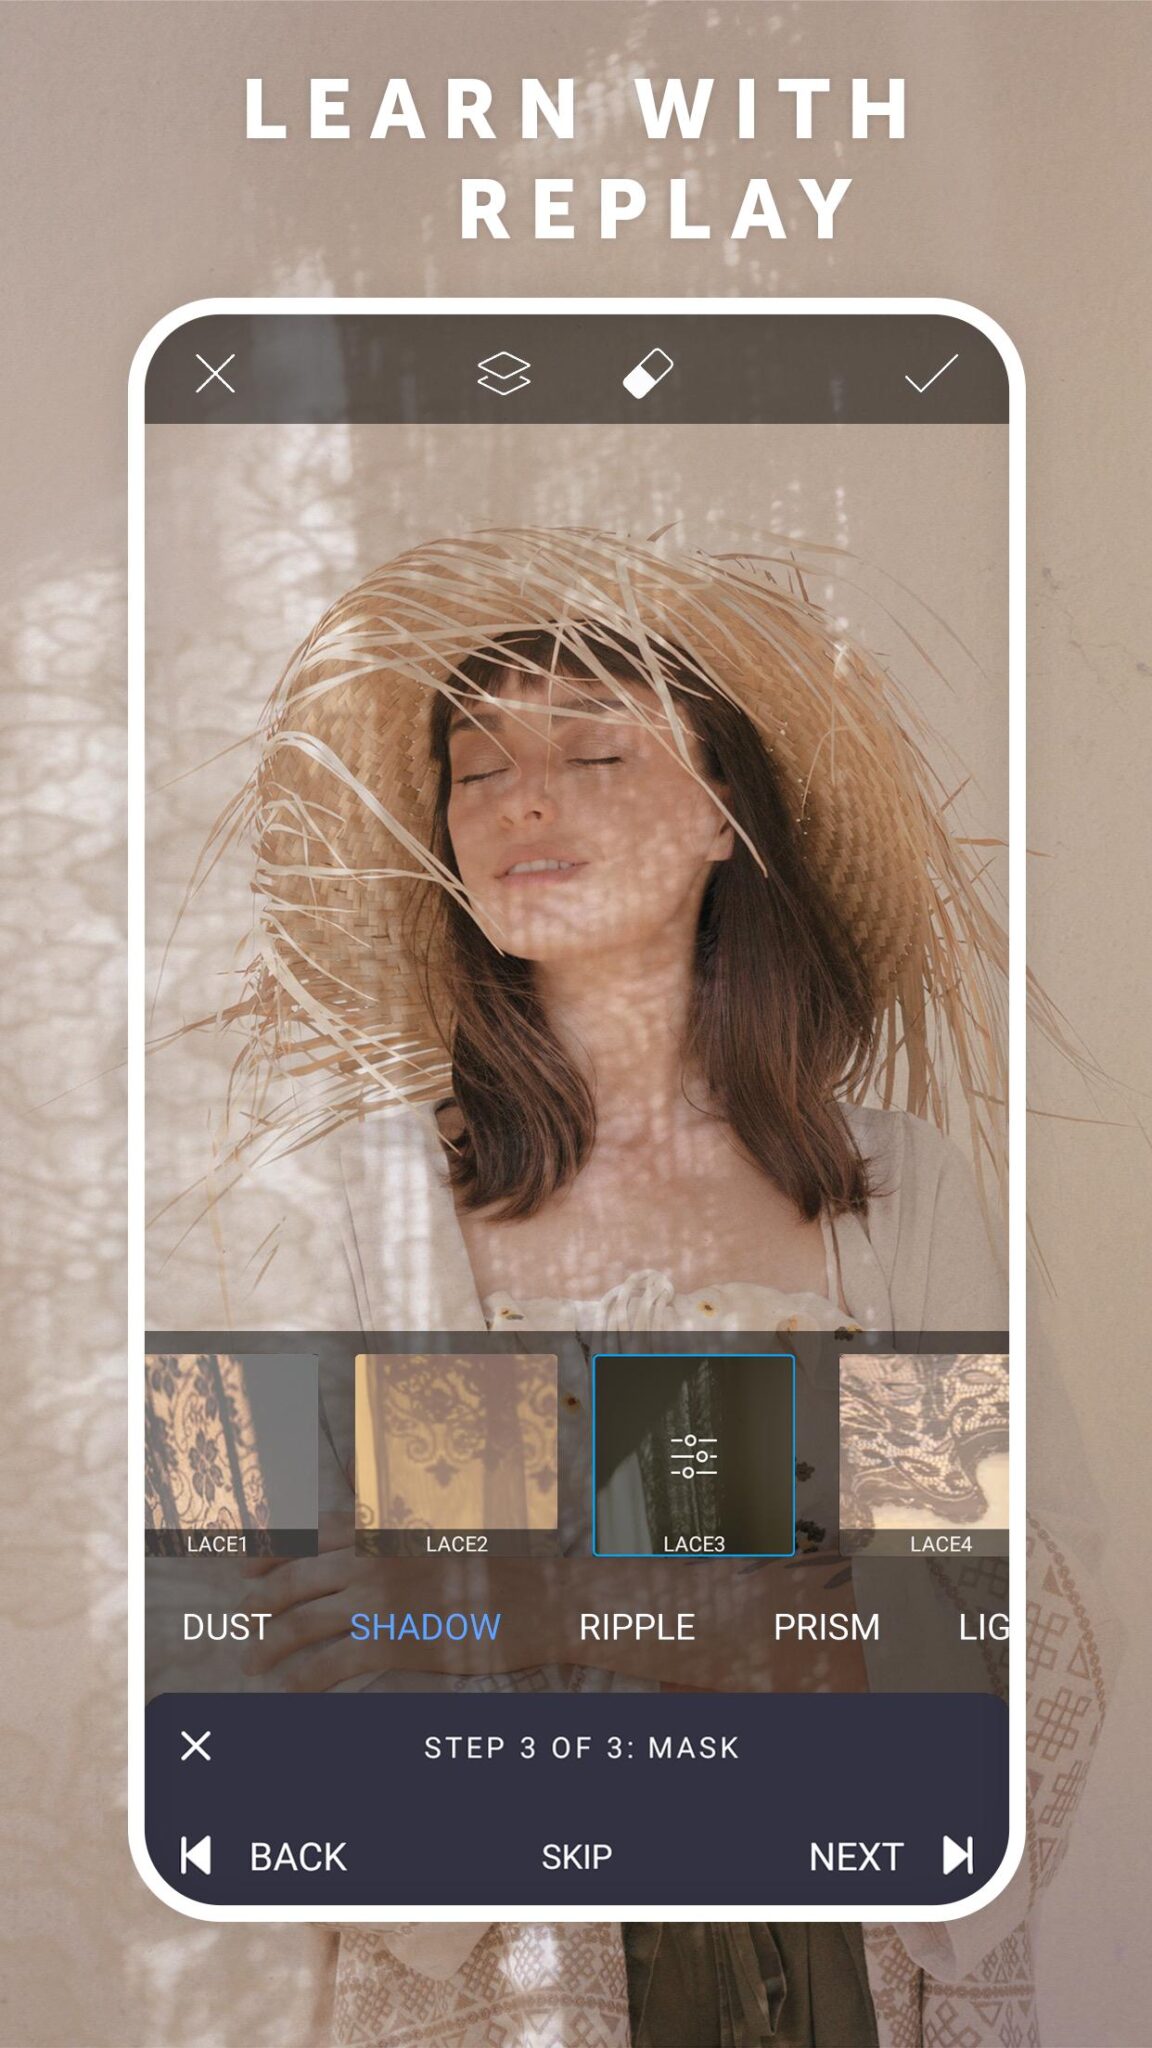 PicsArt Photo Editor Apk Download v15.6.2 - Pic, Video & Collage Maker